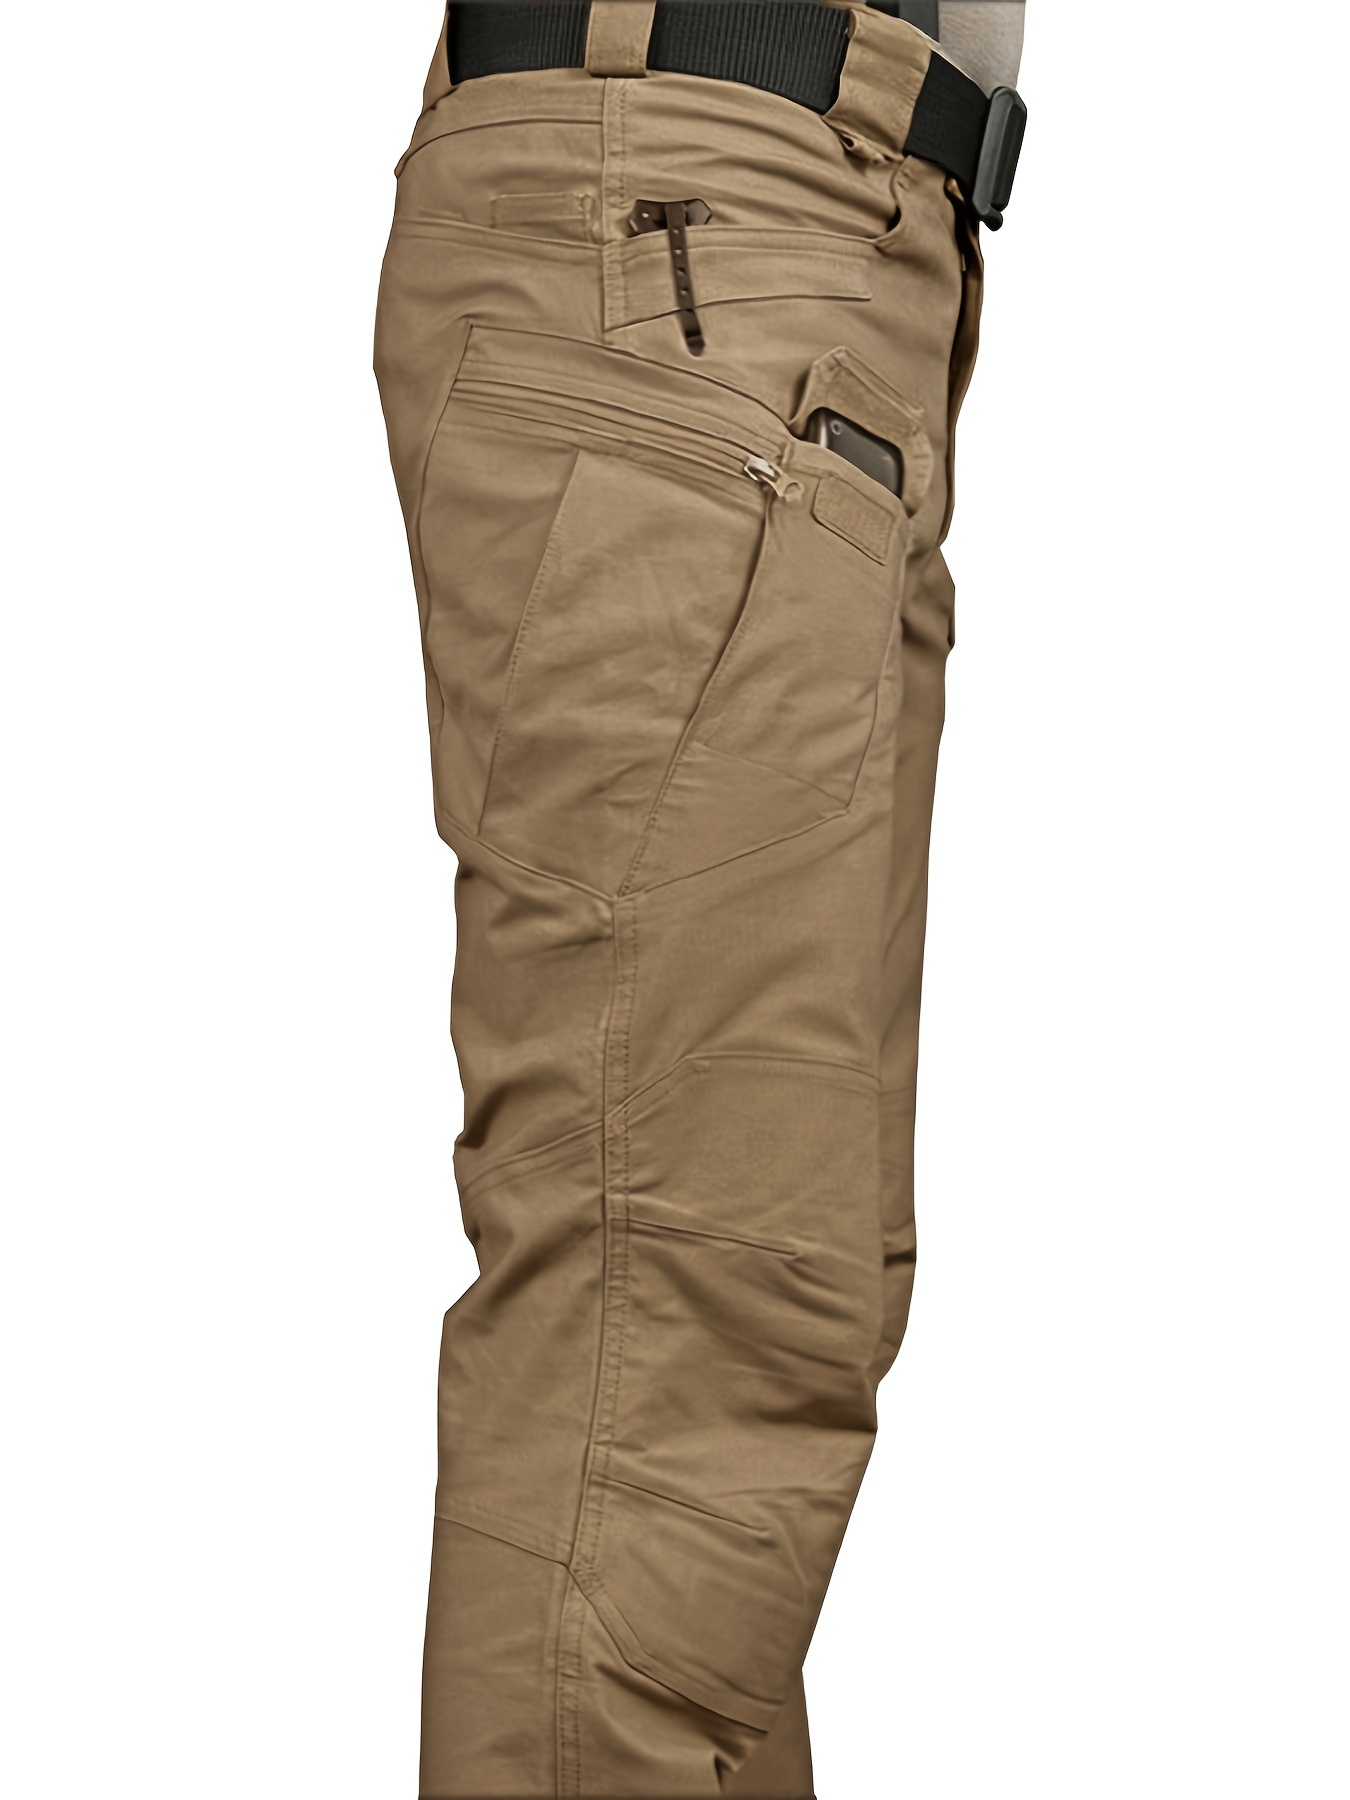 Consul Tactical Leggings Army Waterproof Wear-Resistant Outdoor